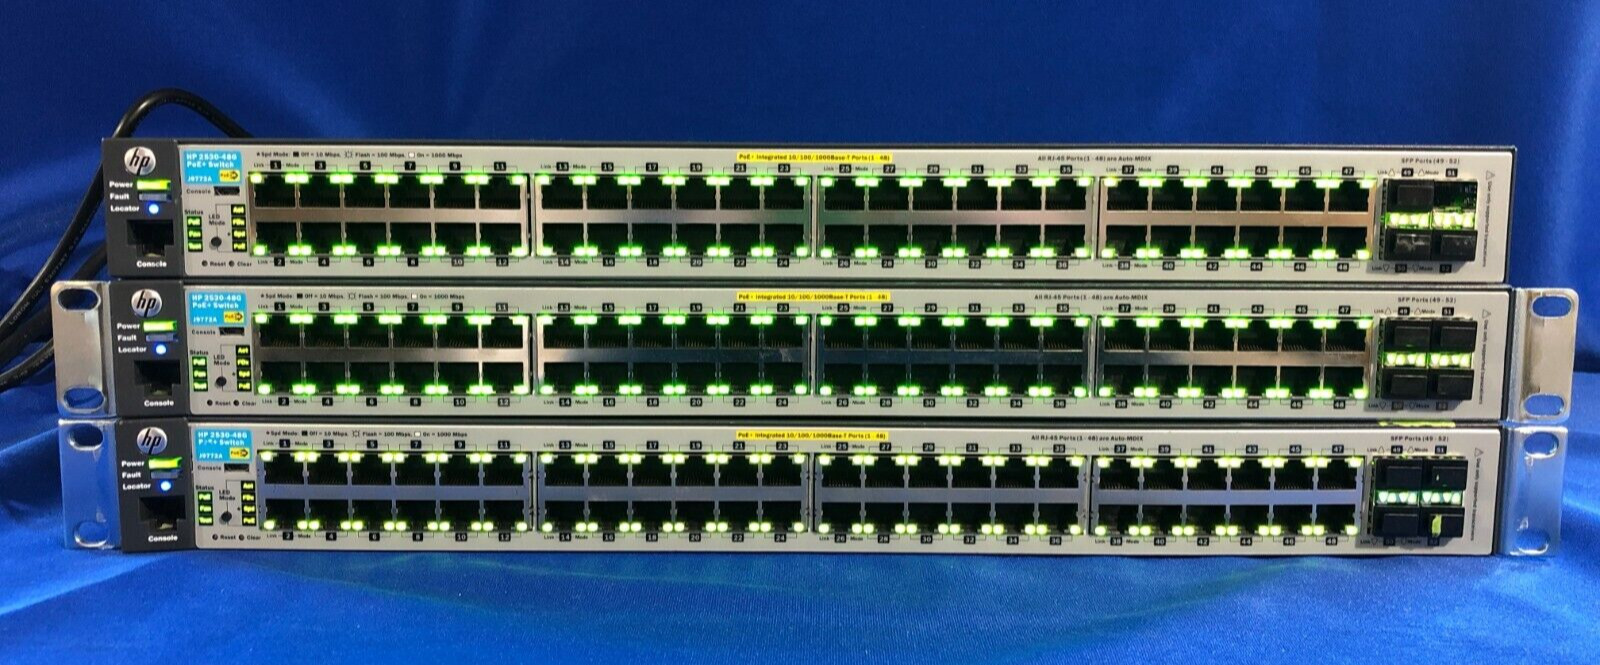 Lot: 3x HP 2530-48G PoE+ Switch J9772A 48-Port - Ports Tested - Read Description